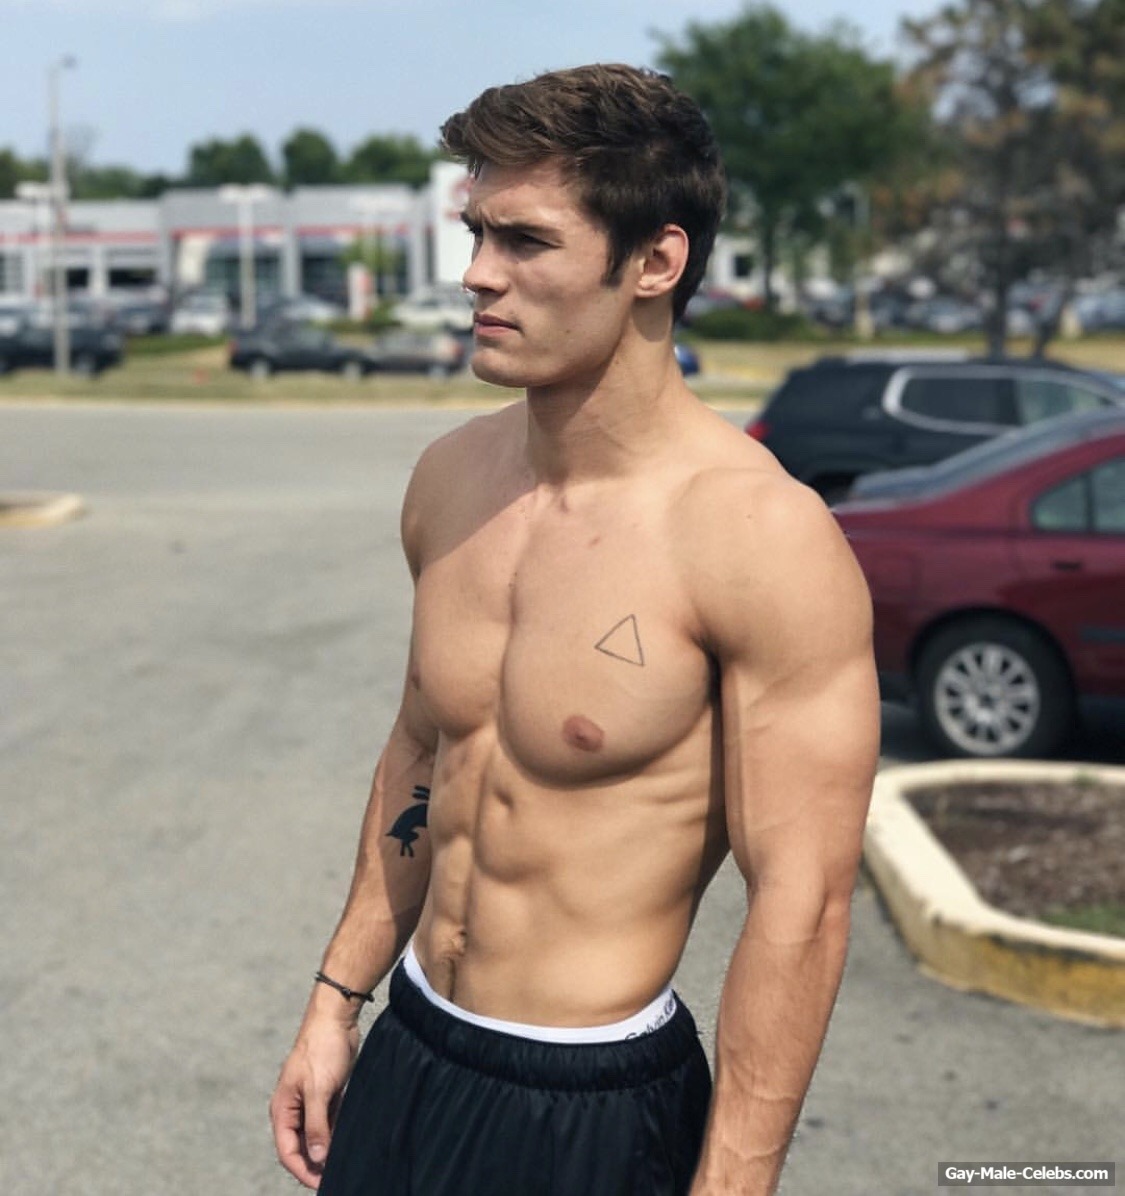 Instagram Star Dylan Geick Nude And Hot Underwear Photos